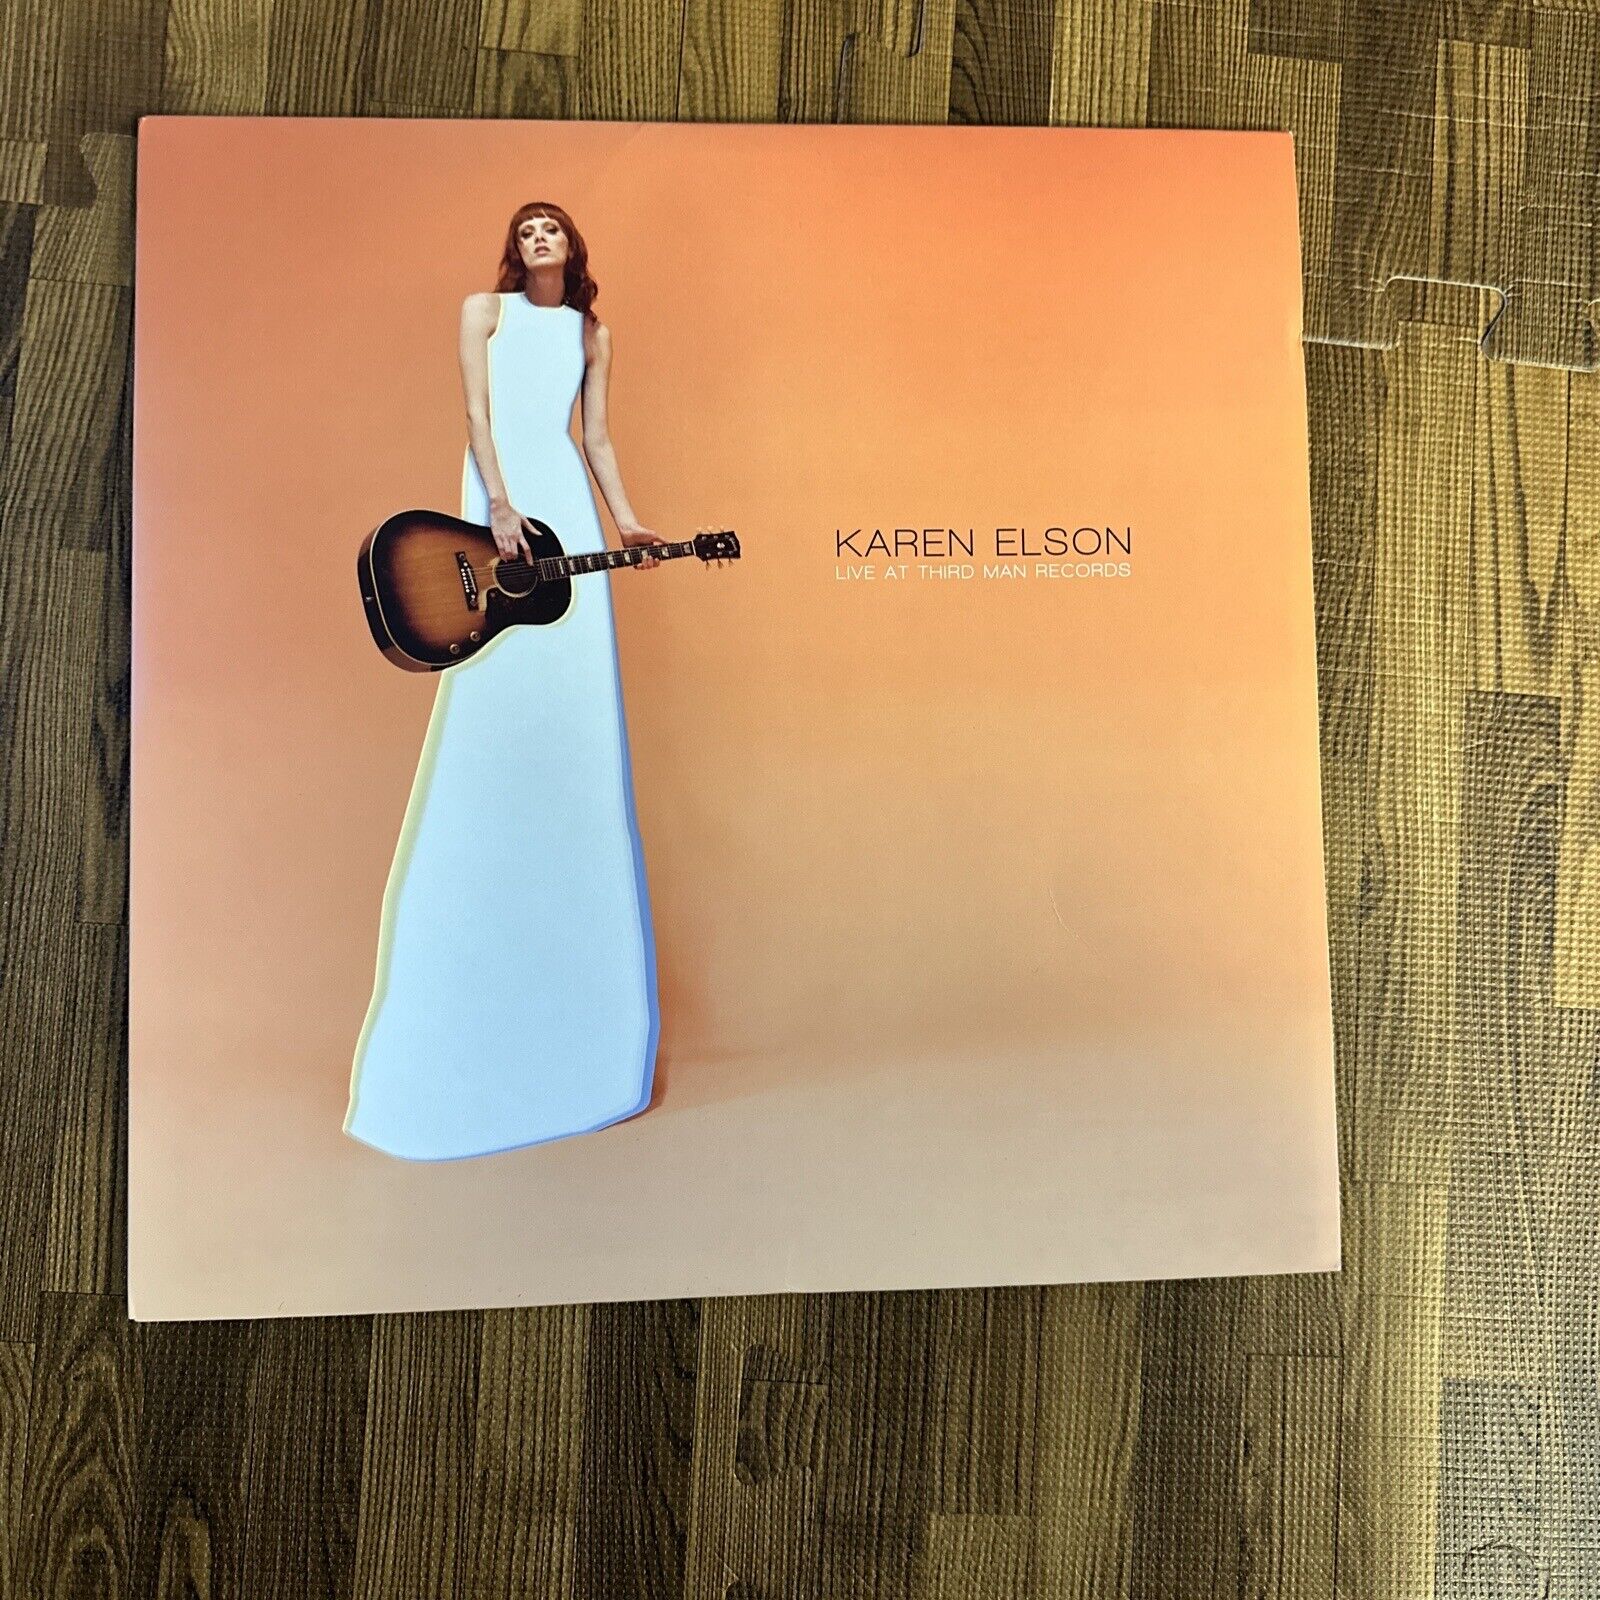 Vinyl KAREN ELSON LIVE AT THIRD MAN RECORDS 2 Tone Rare LP vault Release